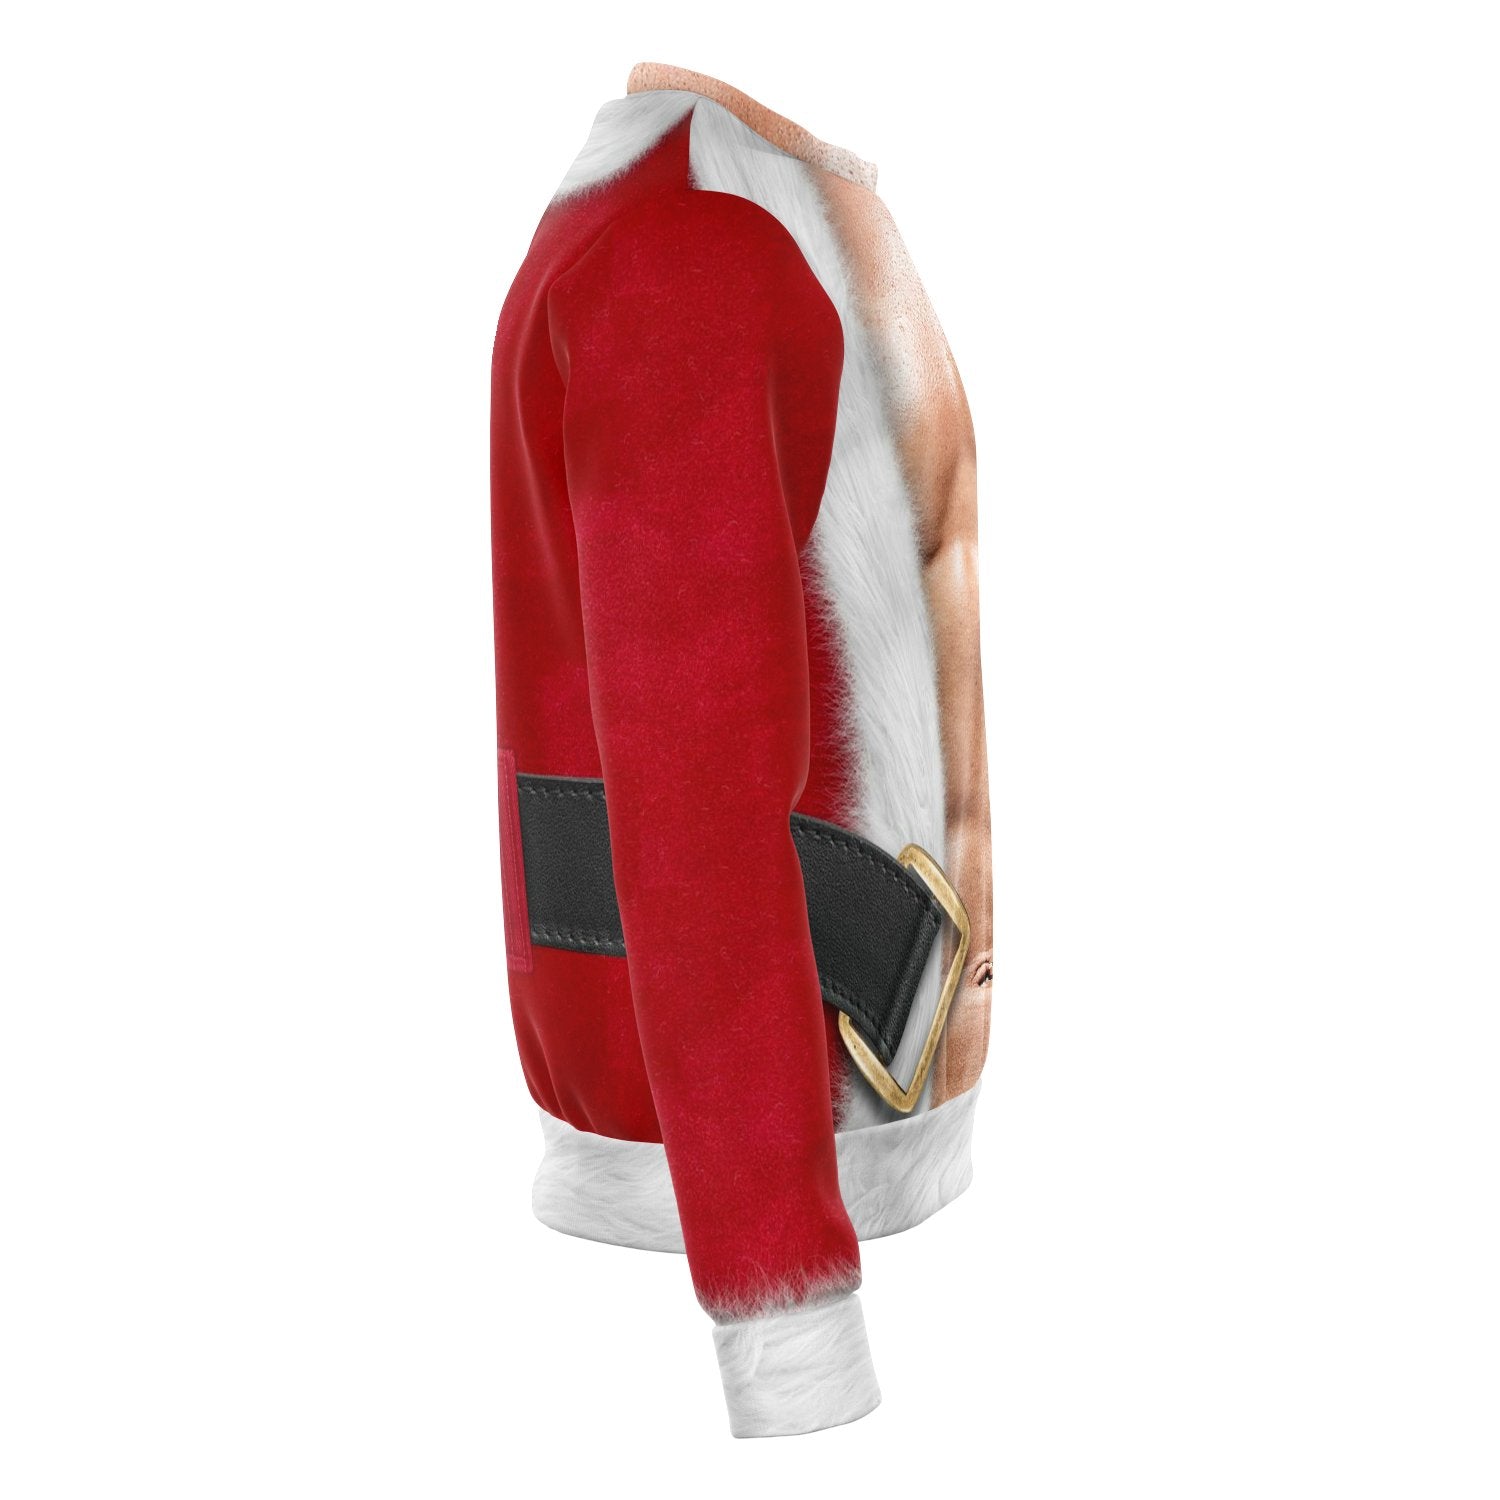 fit santa caucasian christmas ugly sweatshirt